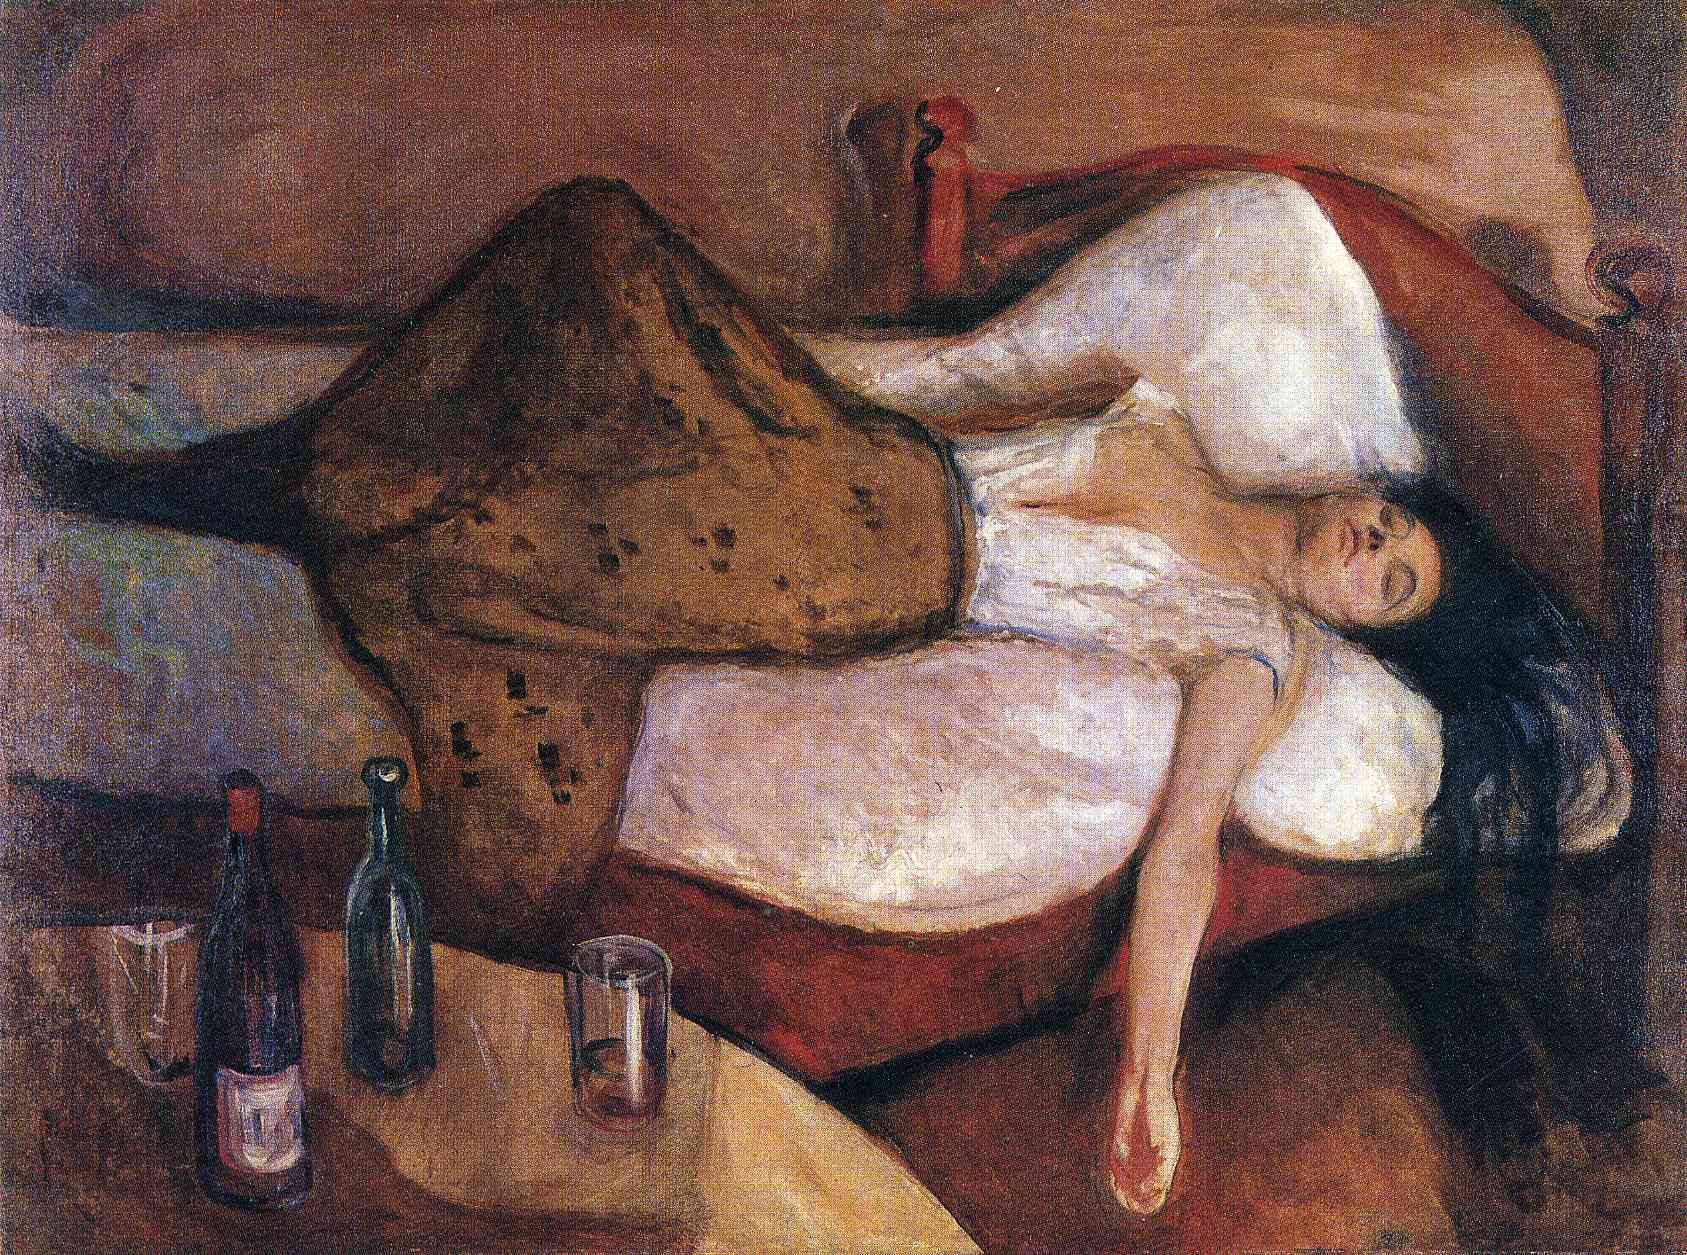 El día después by Edvard Munch - 1894/95 Nasjonalmuseet